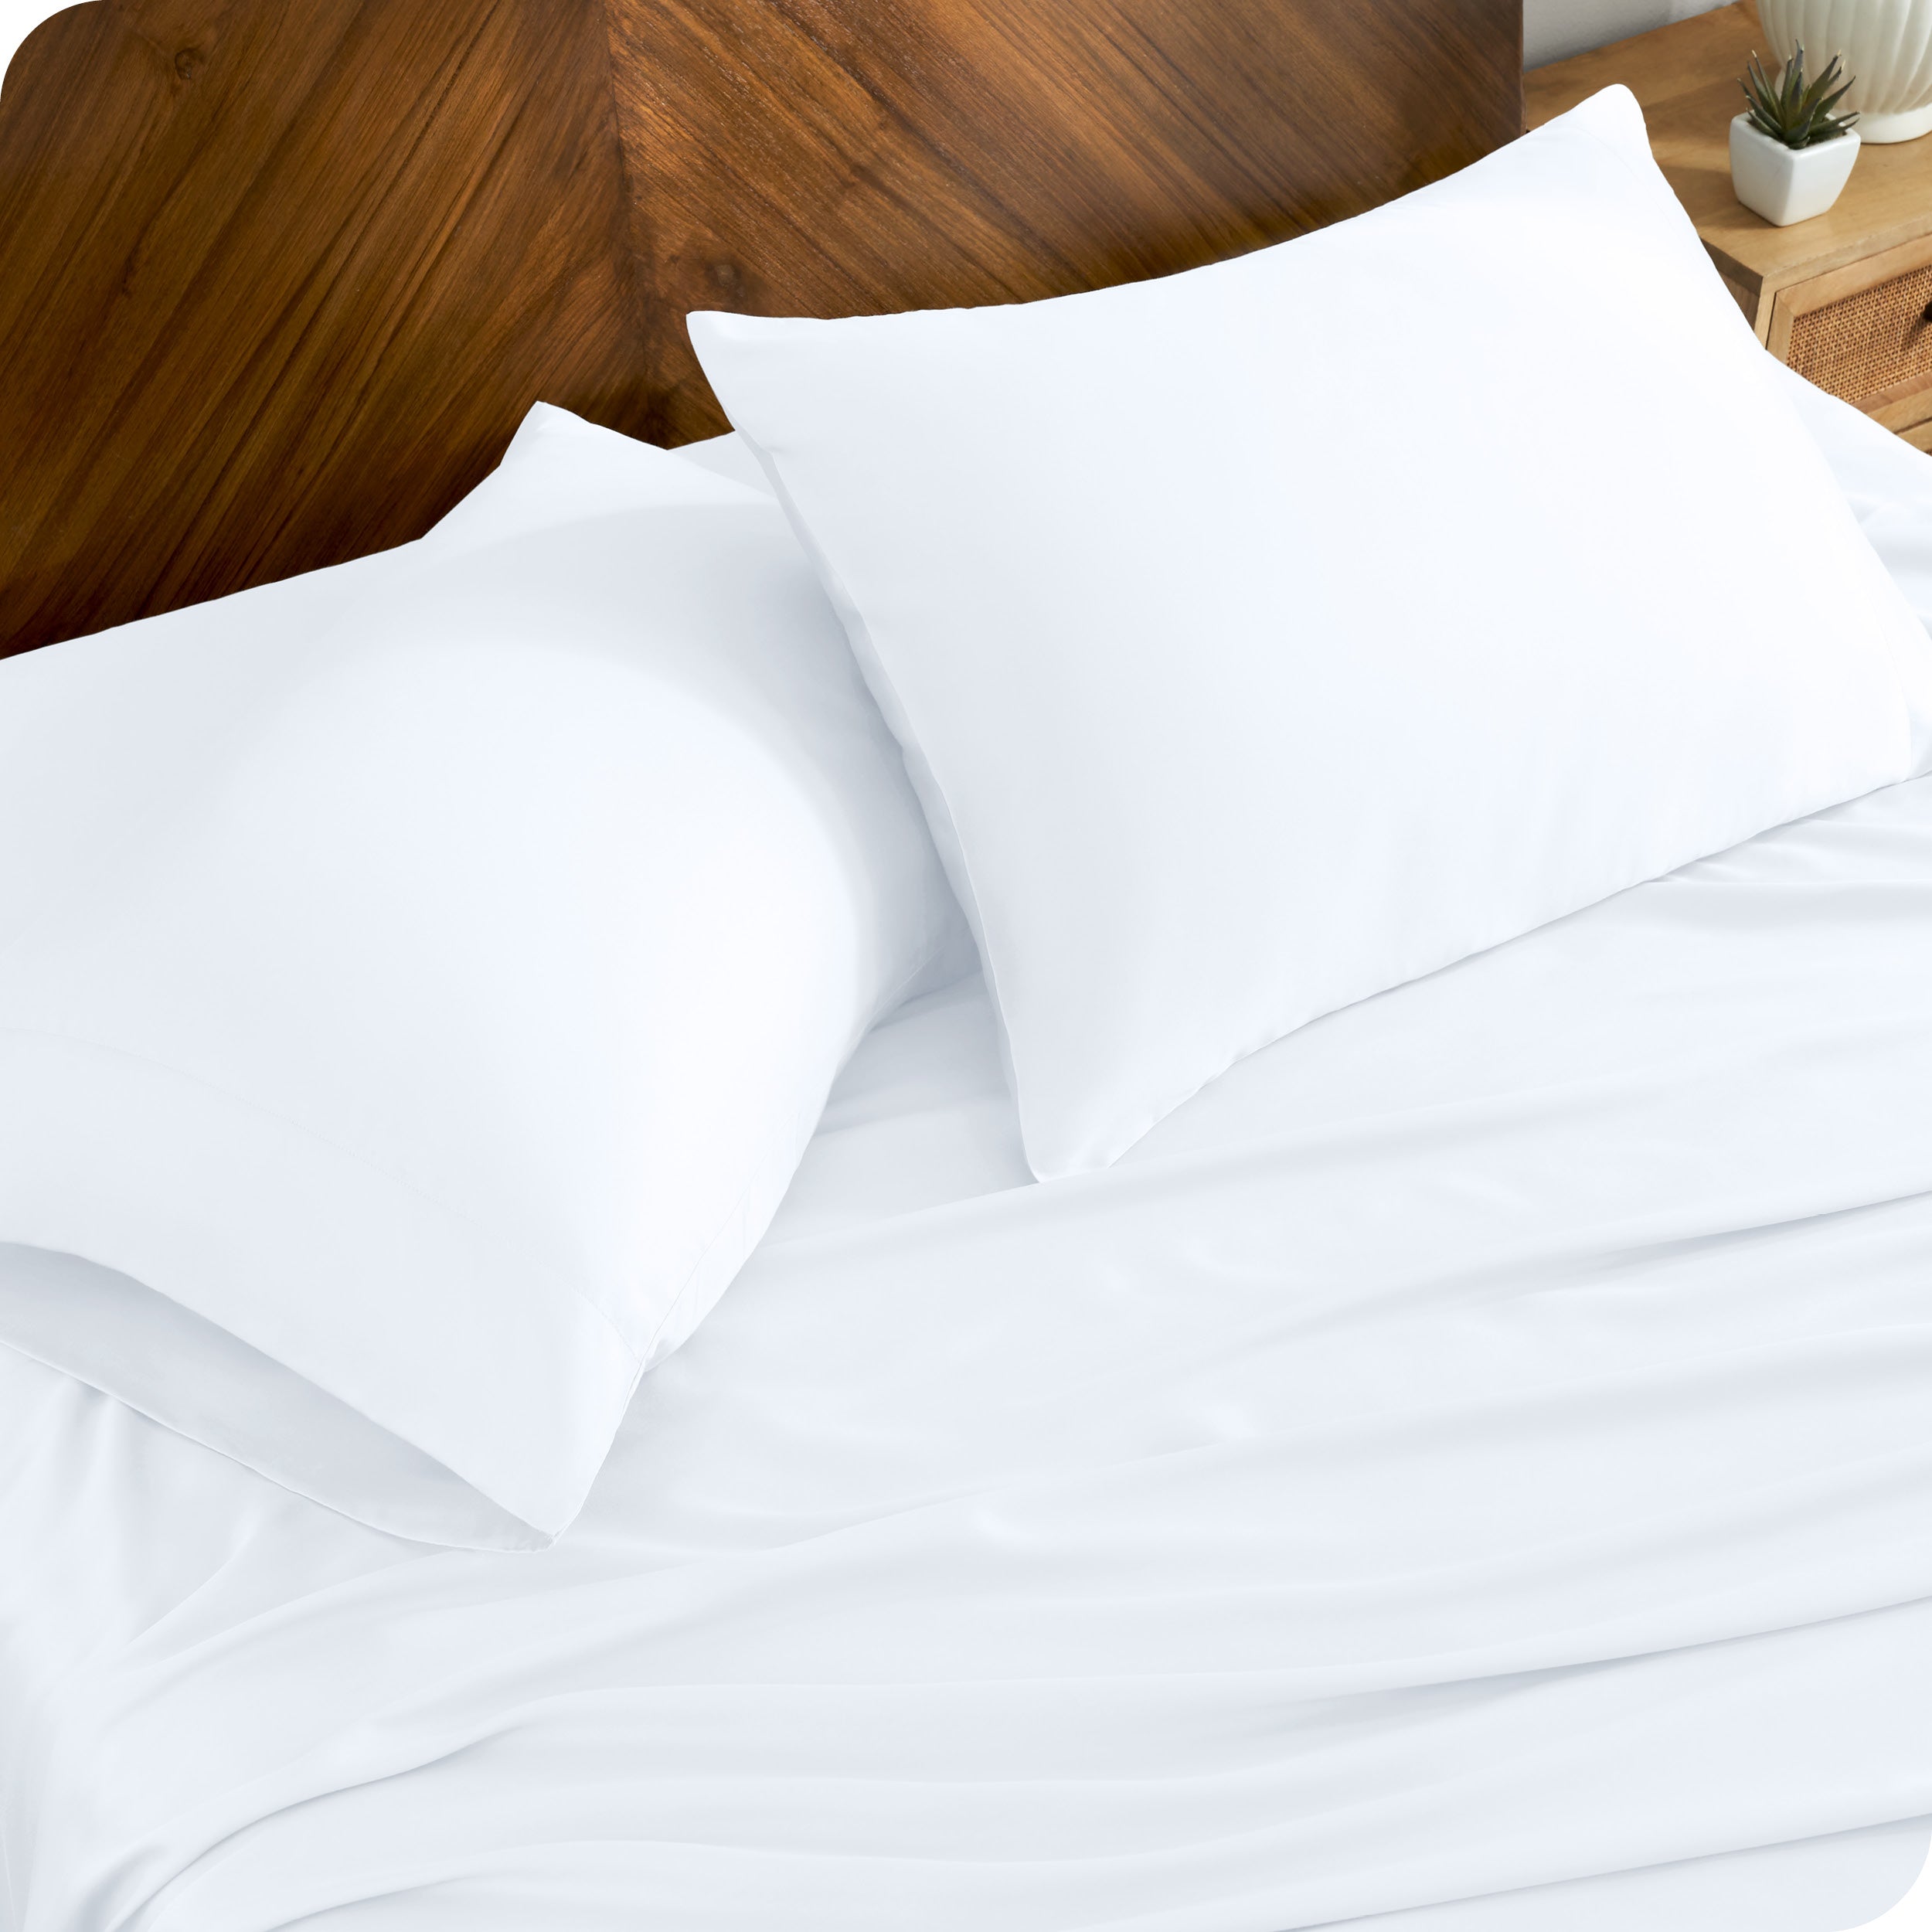 TENCEL™ pillowcases on pillows near a wooden headboard